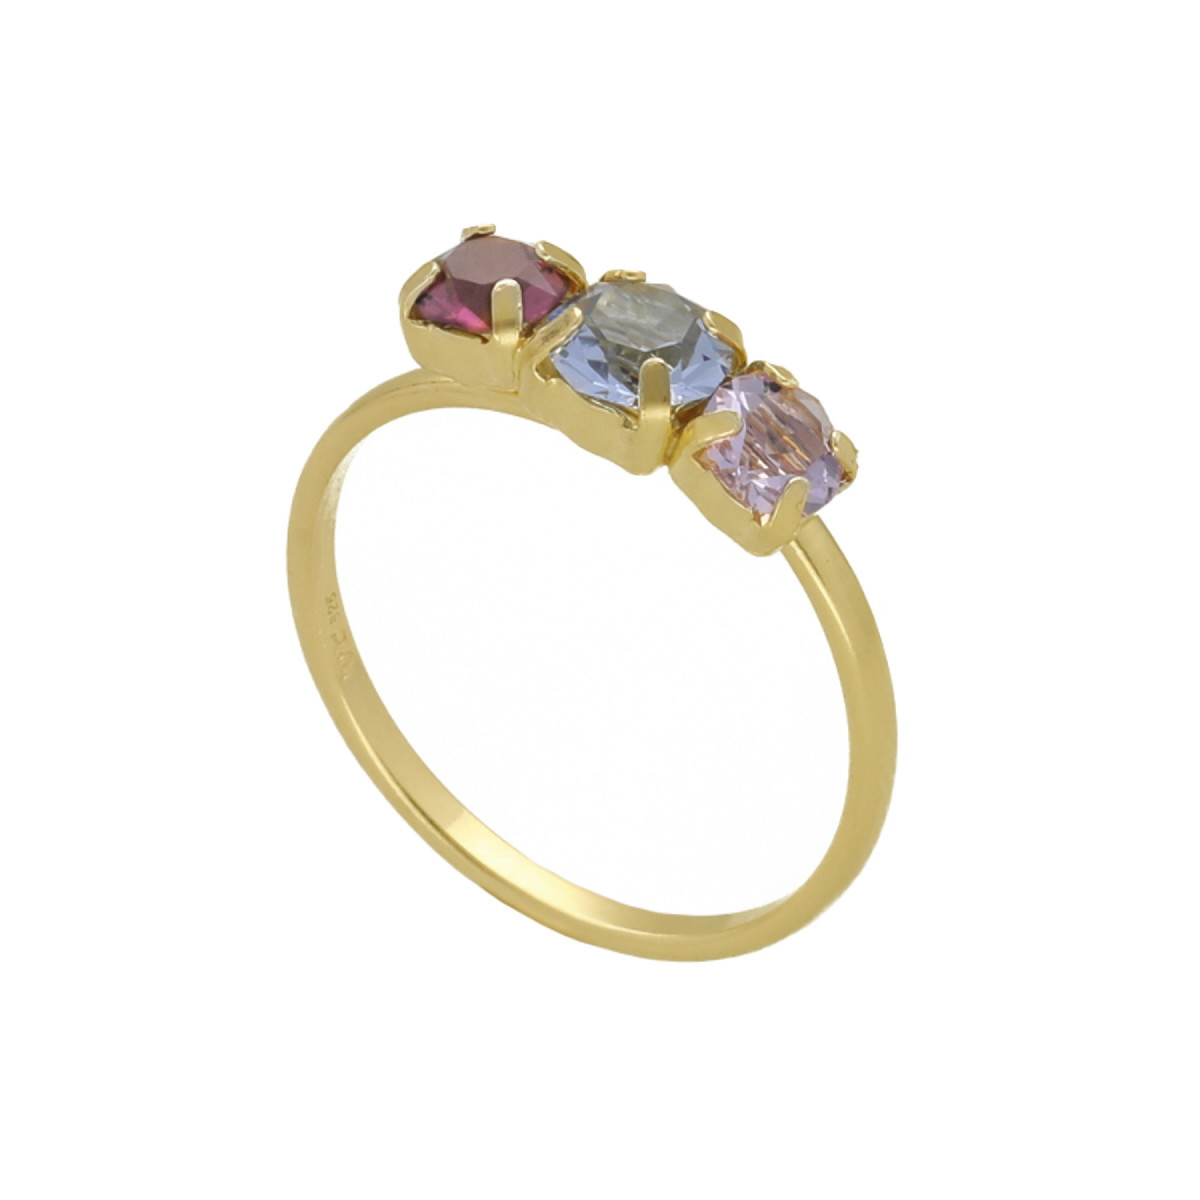 Victoria Cruz Balance gold-plated adjustable ring with purple